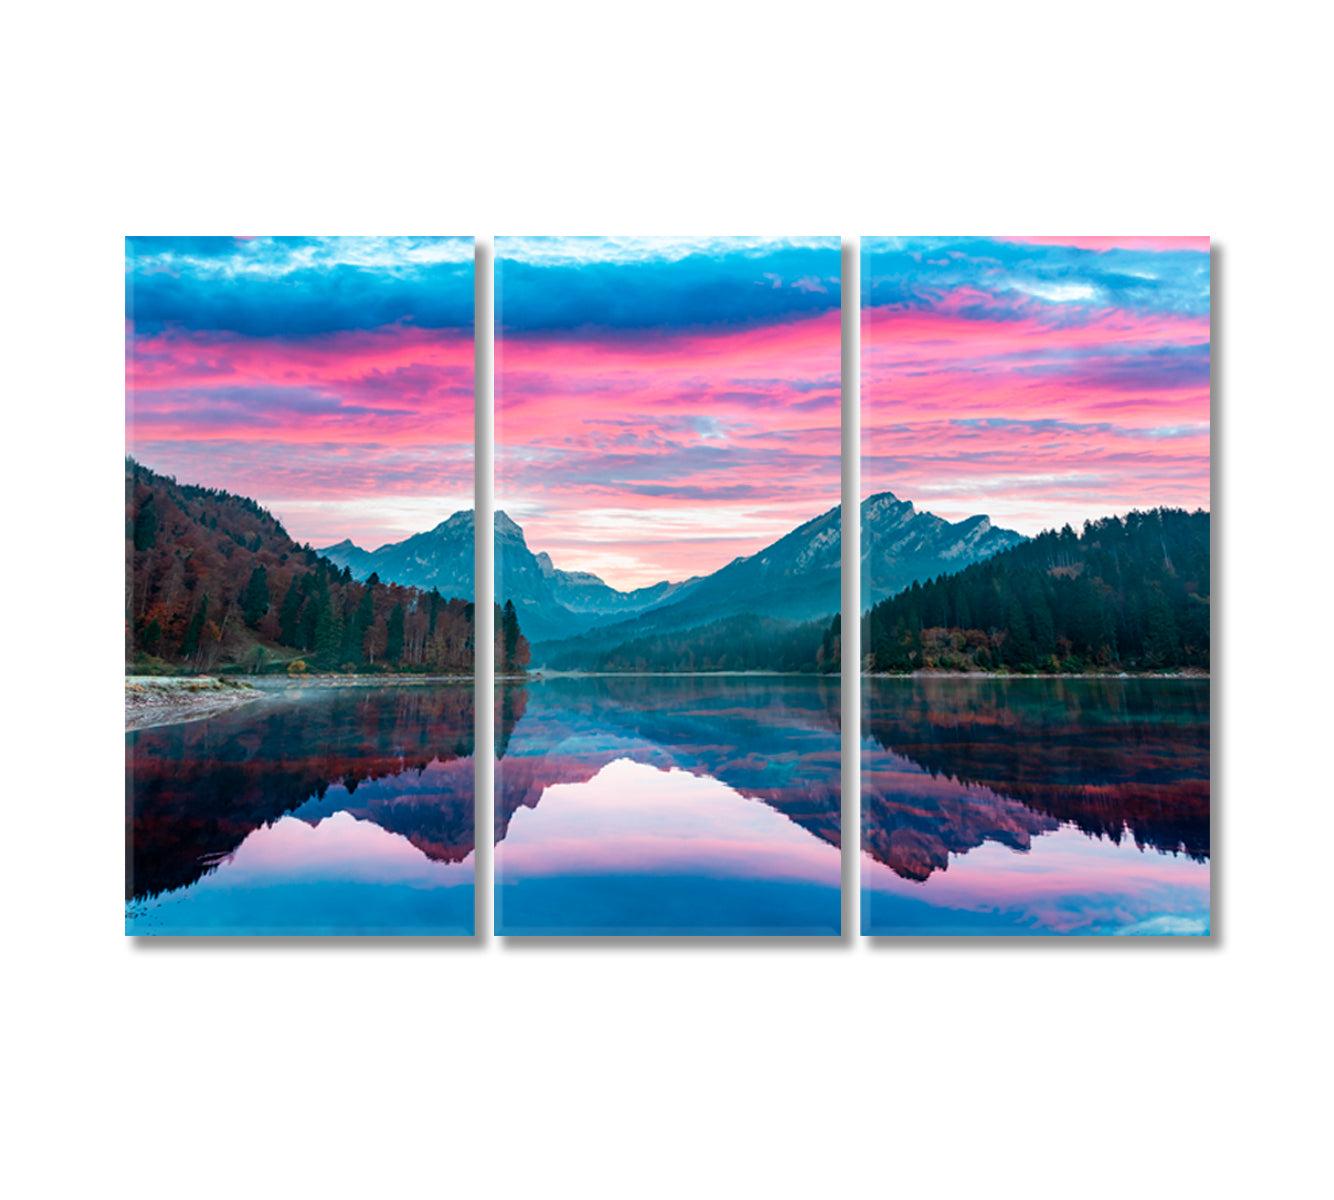 Dramatic Sunset at Obersee Lake Swiss Alps Switzerland Canvas Print-Canvas Print-CetArt-3 Panels-36x24 inches-CetArt